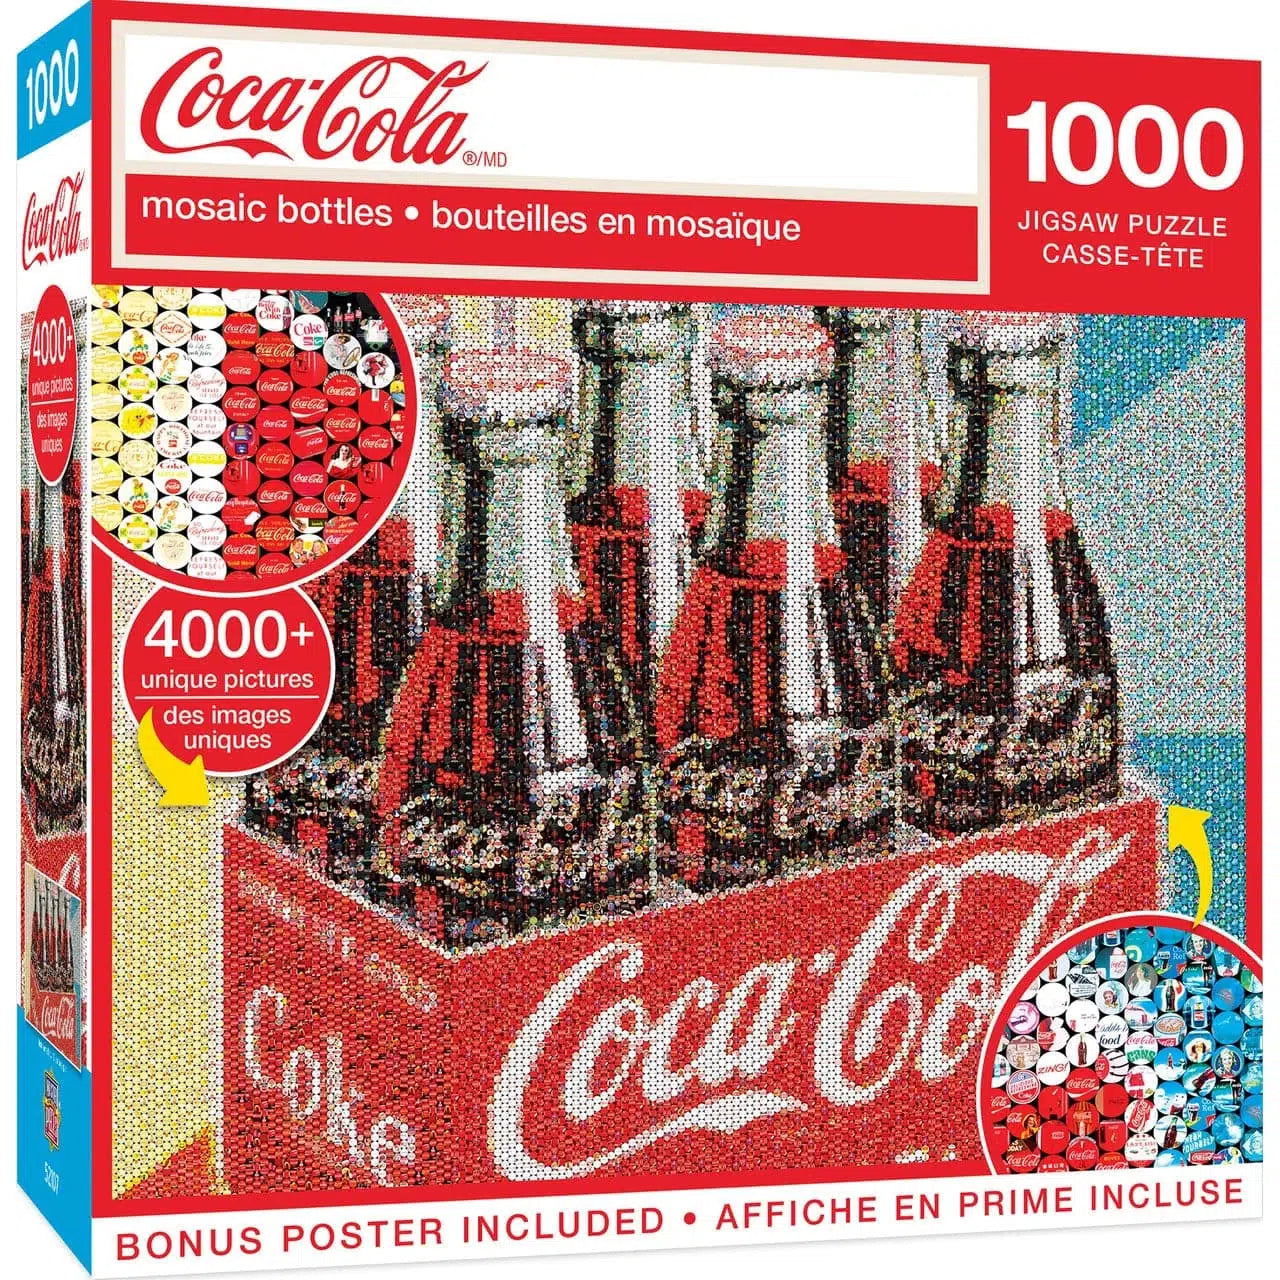 Coca-Cola Tailgate Puzzle